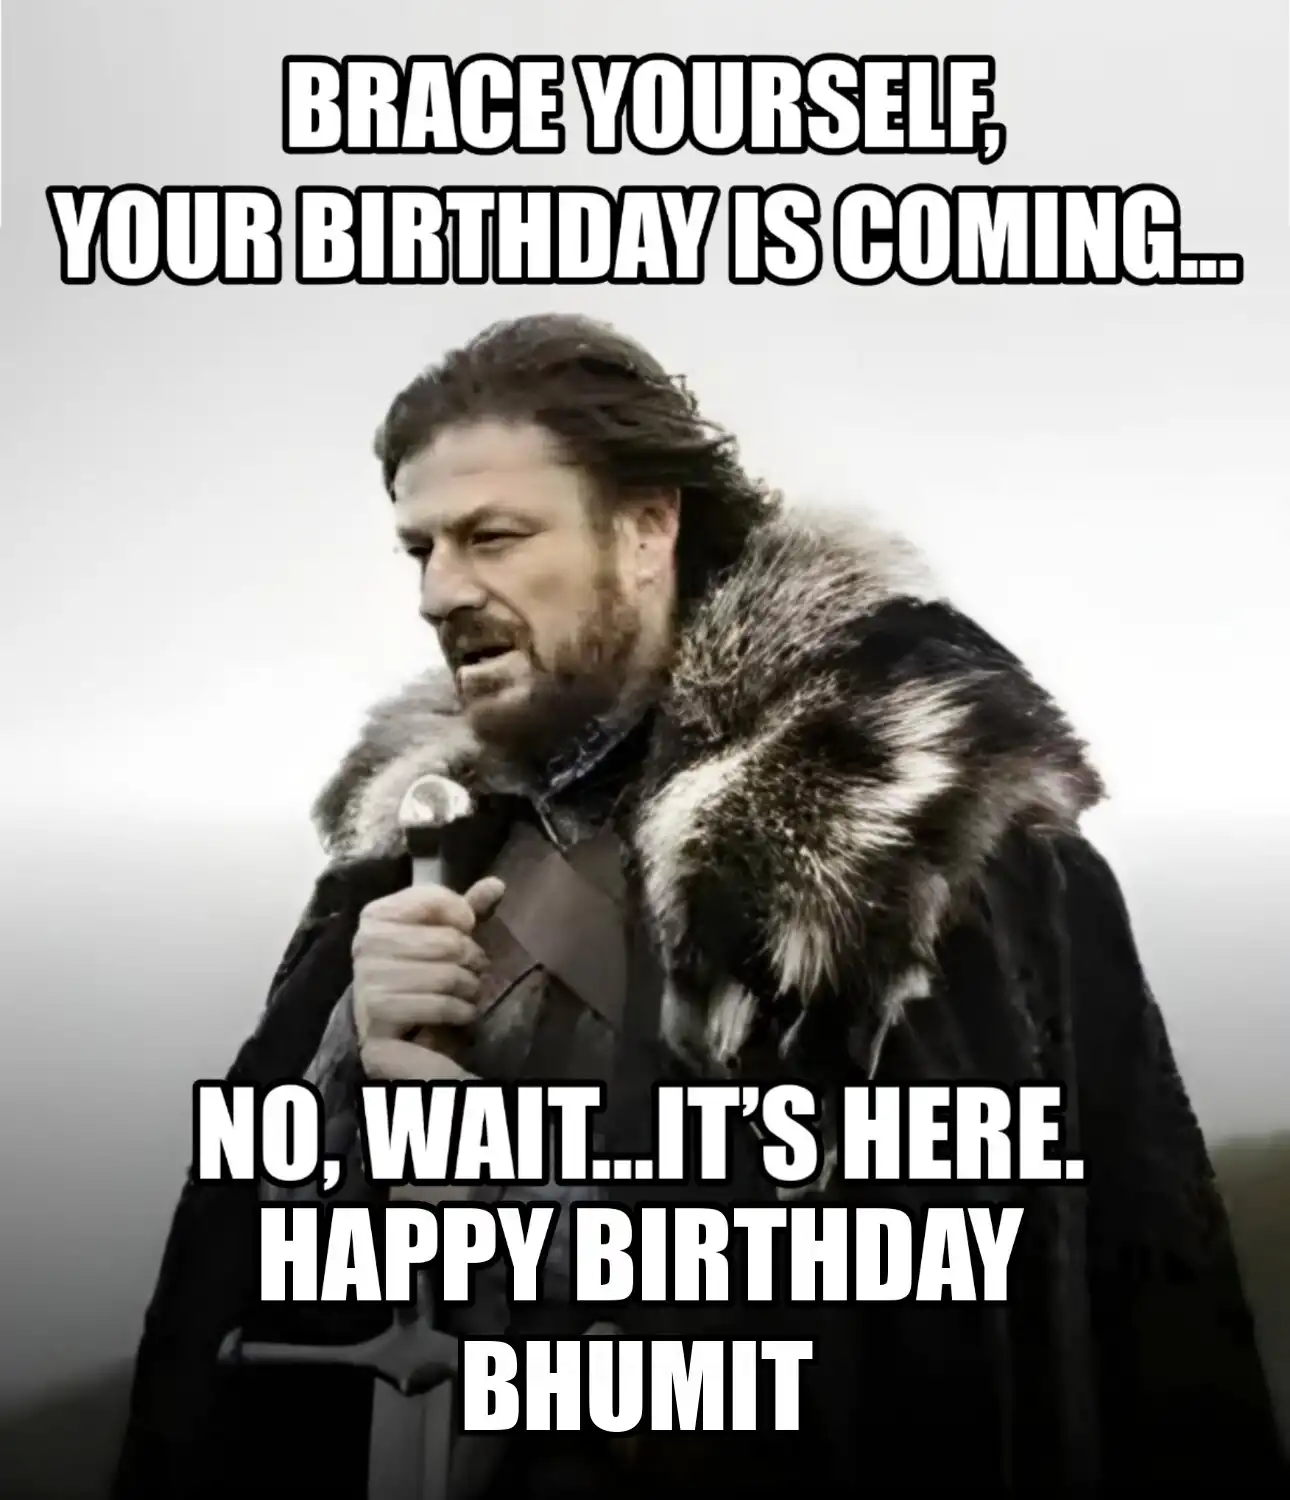 Happy Birthday Bhumit Brace Yourself Your Birthday Is Coming Meme